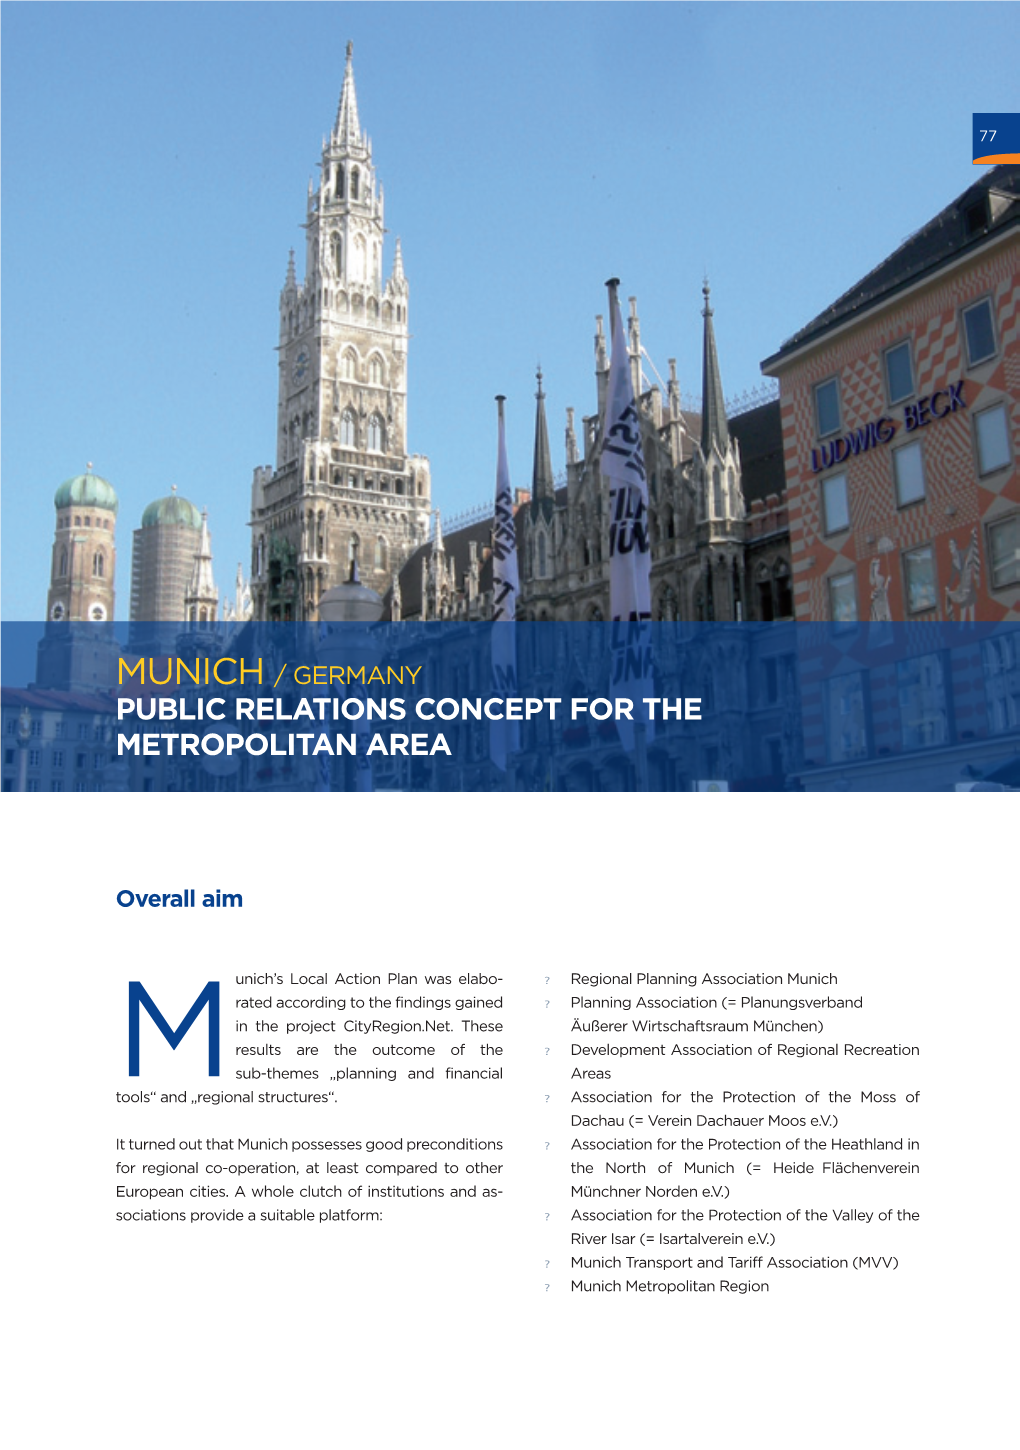 Public Relations Concept for the Metropolitan Area